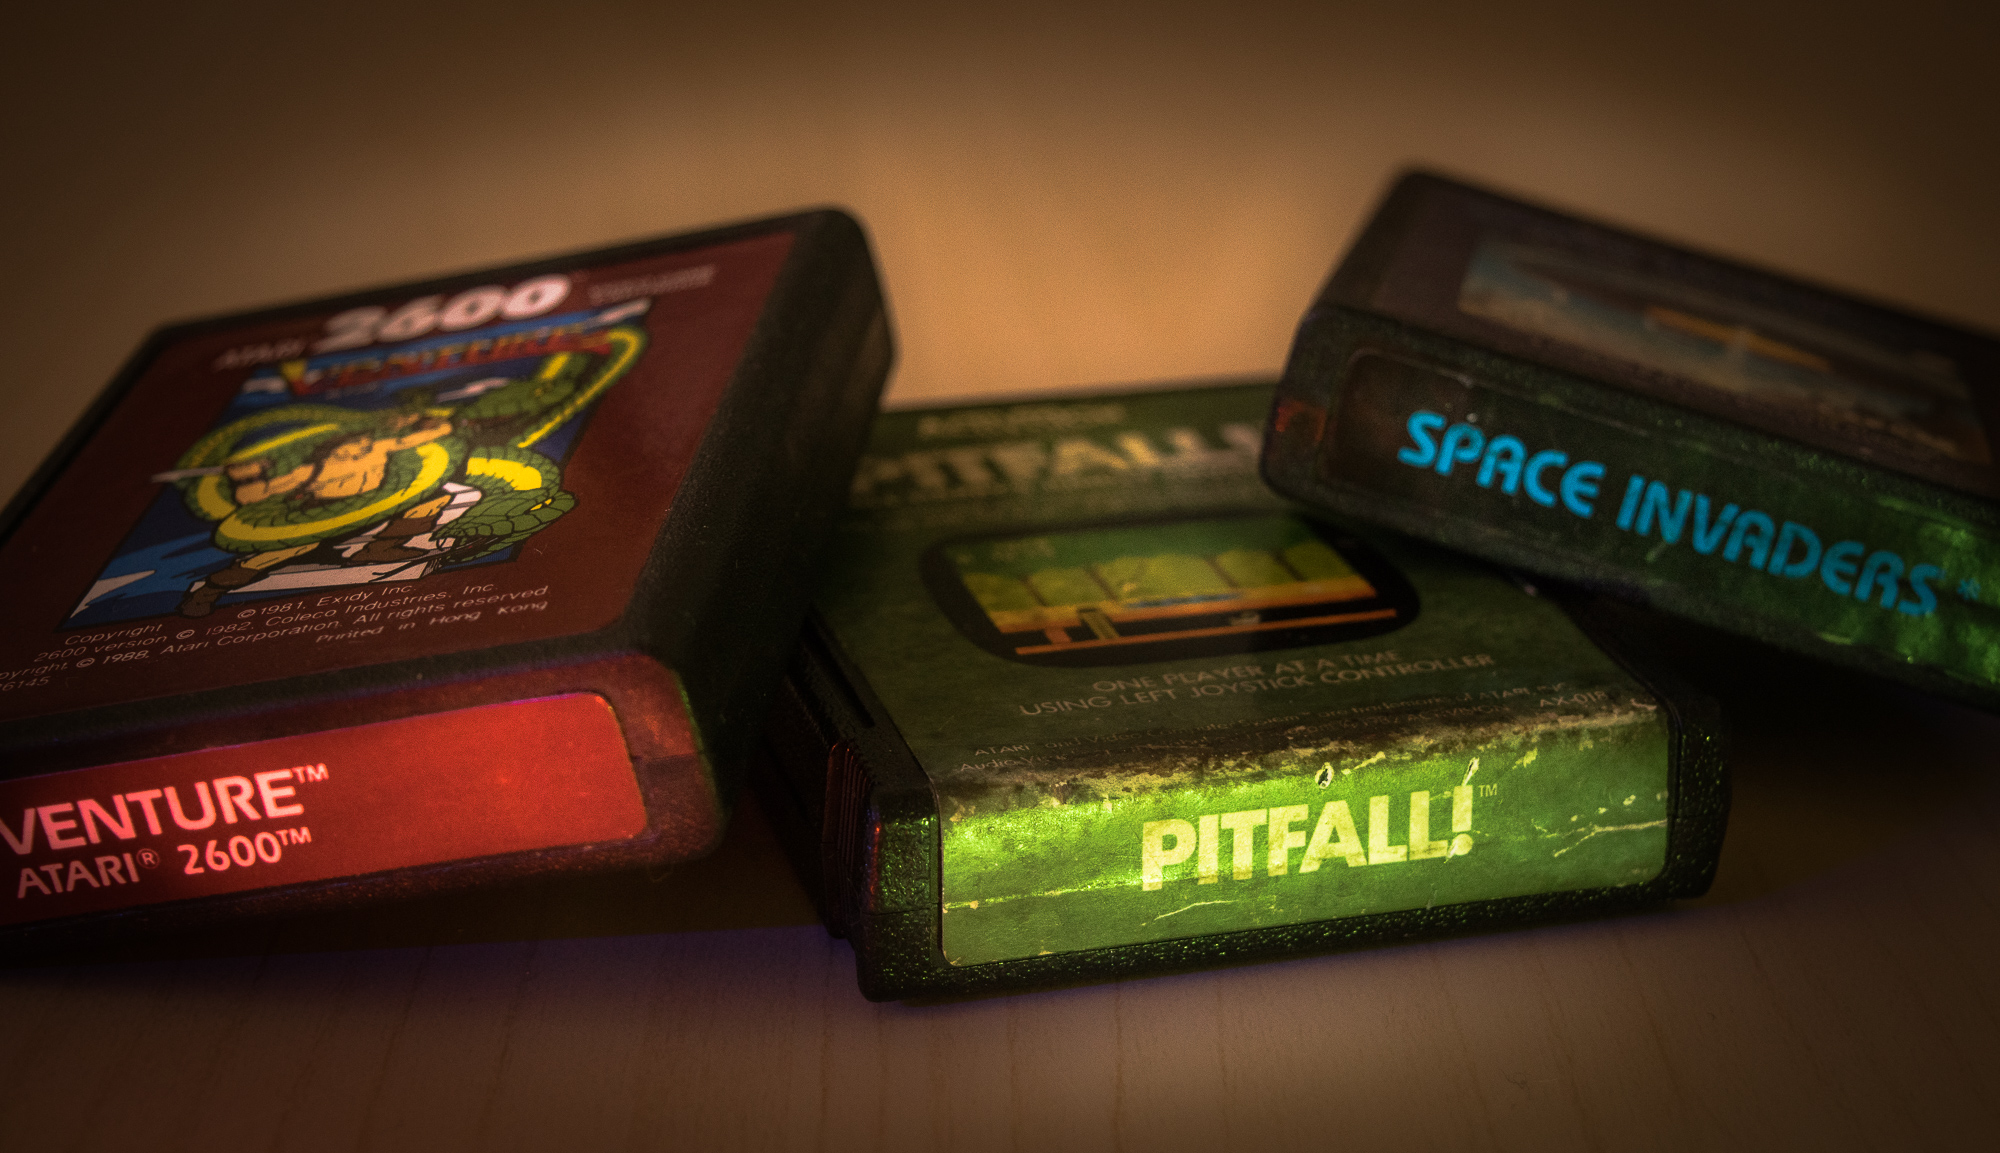 Atari 2600 games: Venture, Pitfall and Space Invaders